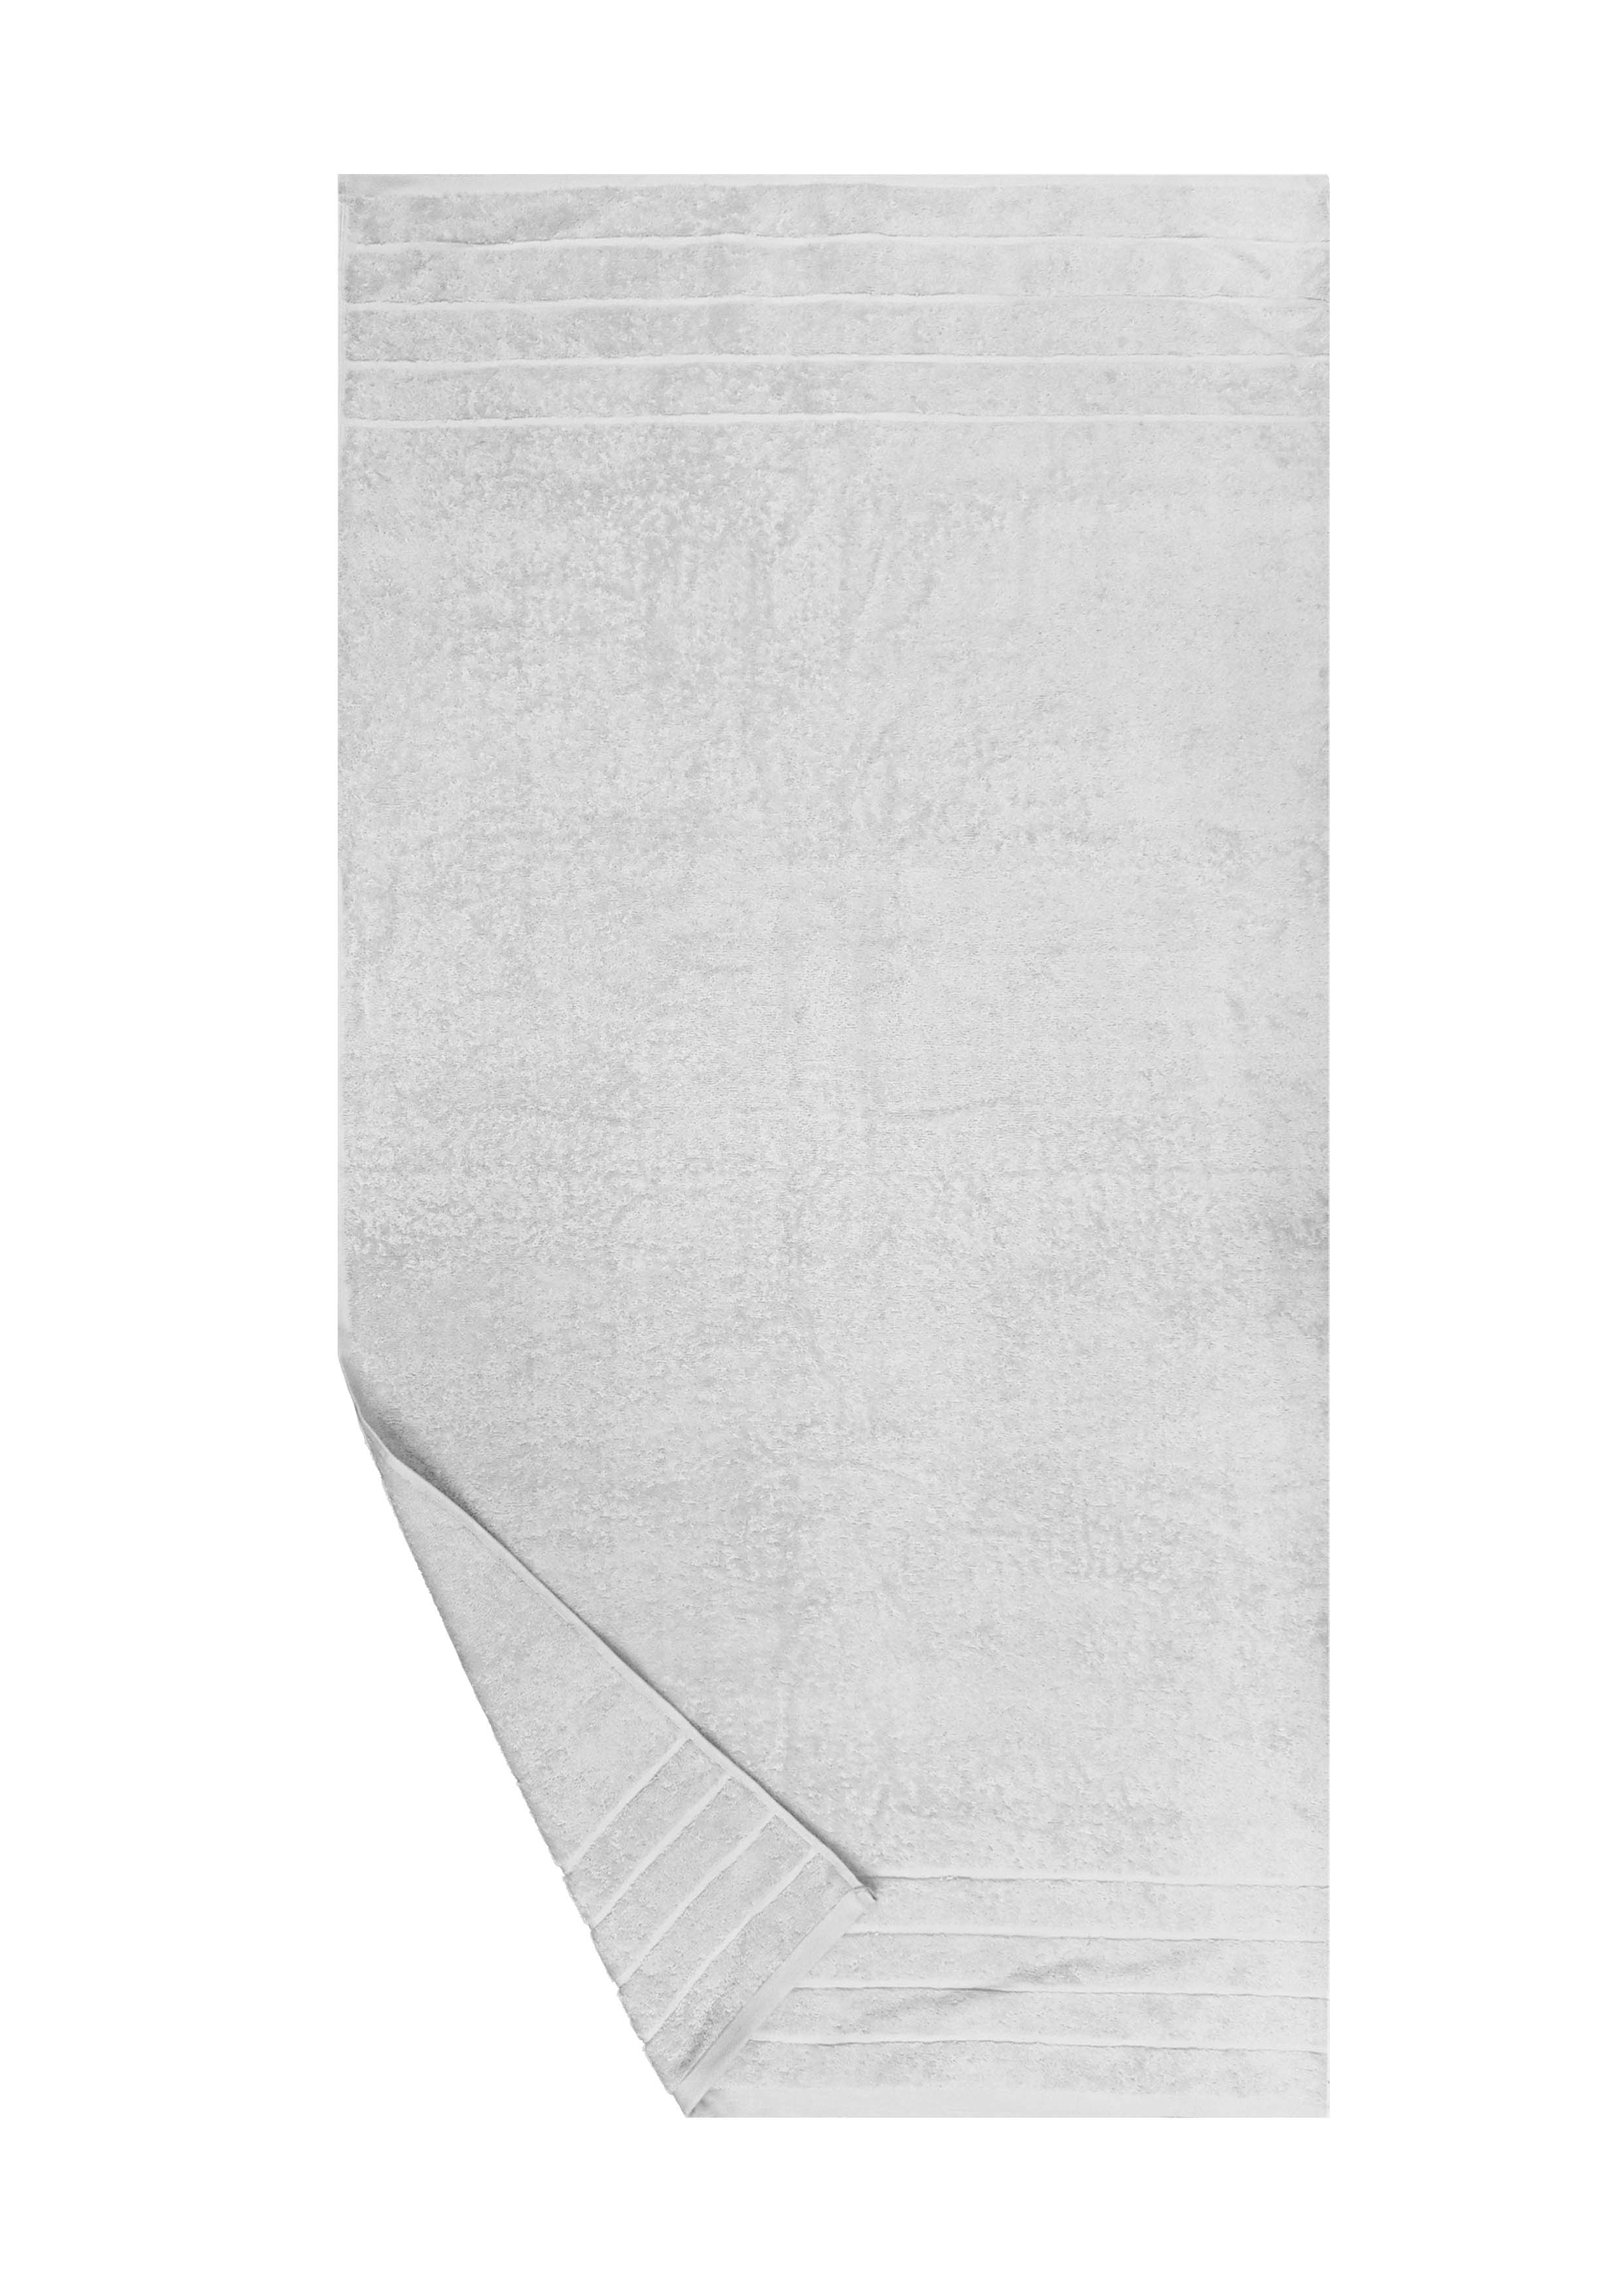 Khăn Tắm Akemi Dry-Tech Cotton 68cm x 138cm, 1 cái